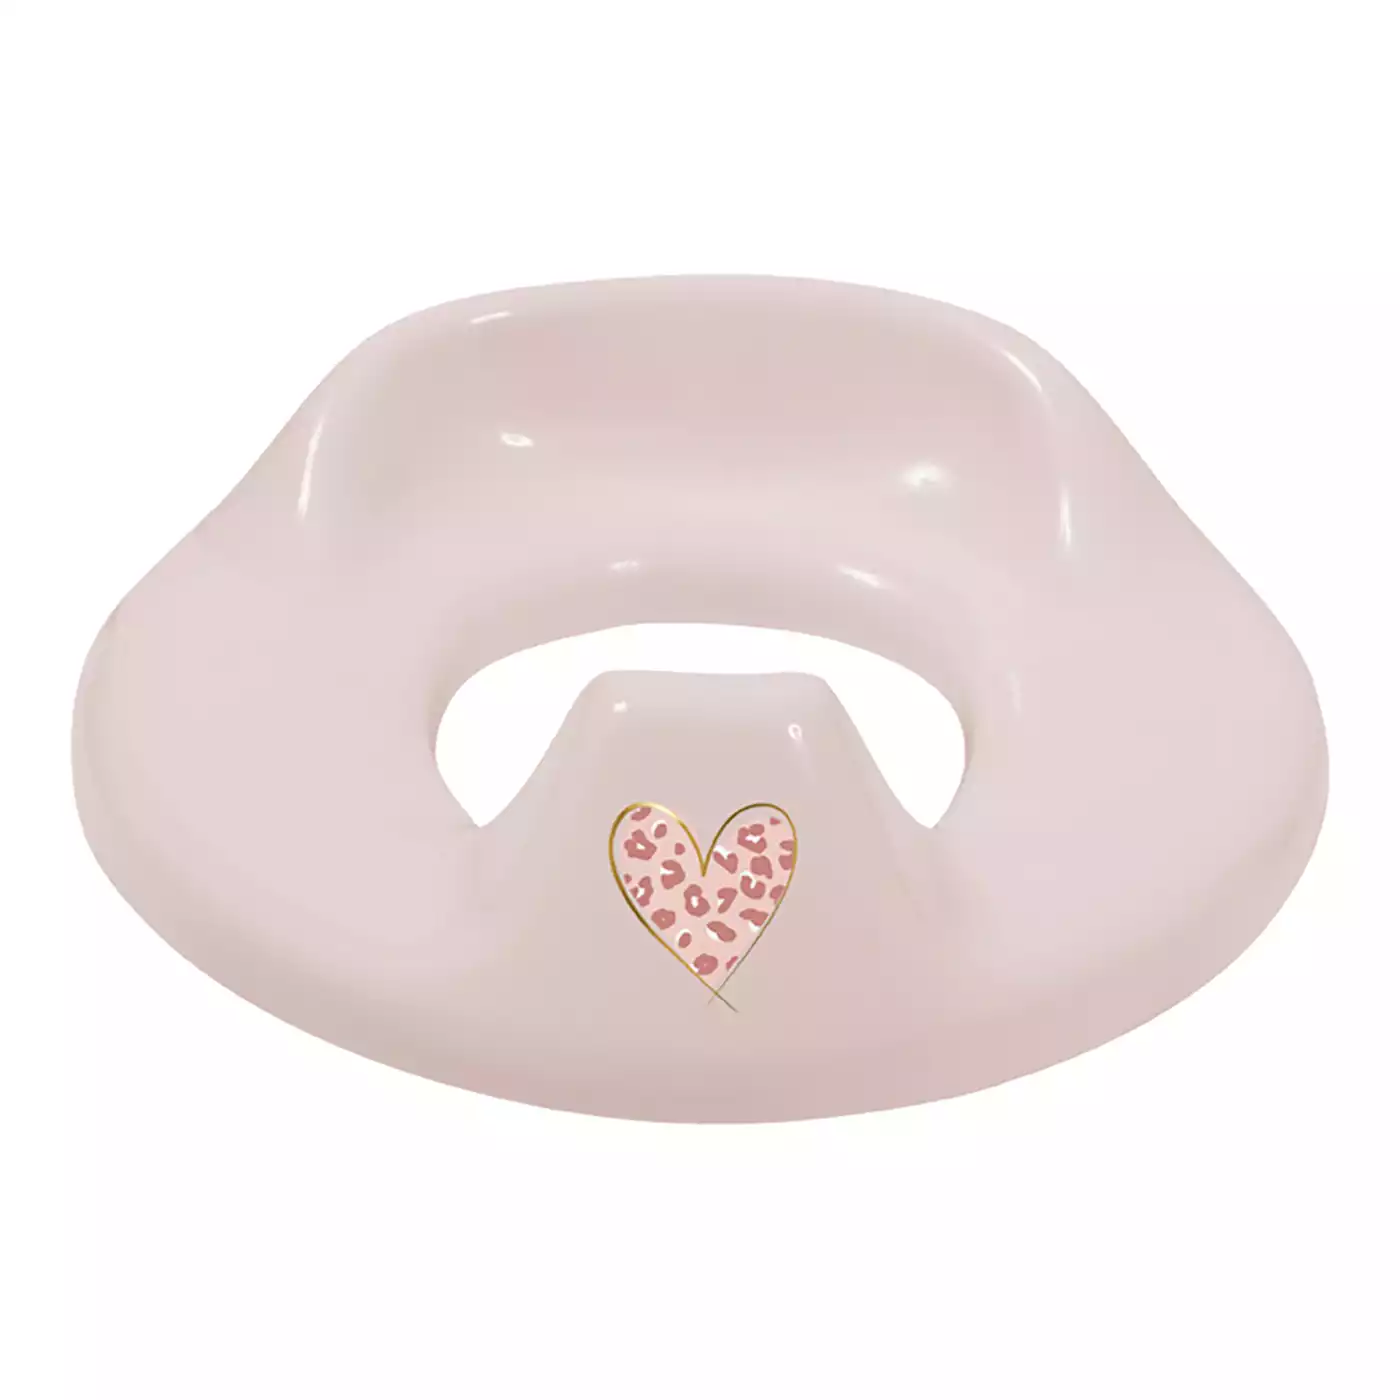 Toilettensitz Leopard Pink bébé-jou Rosa 2000577885503 3